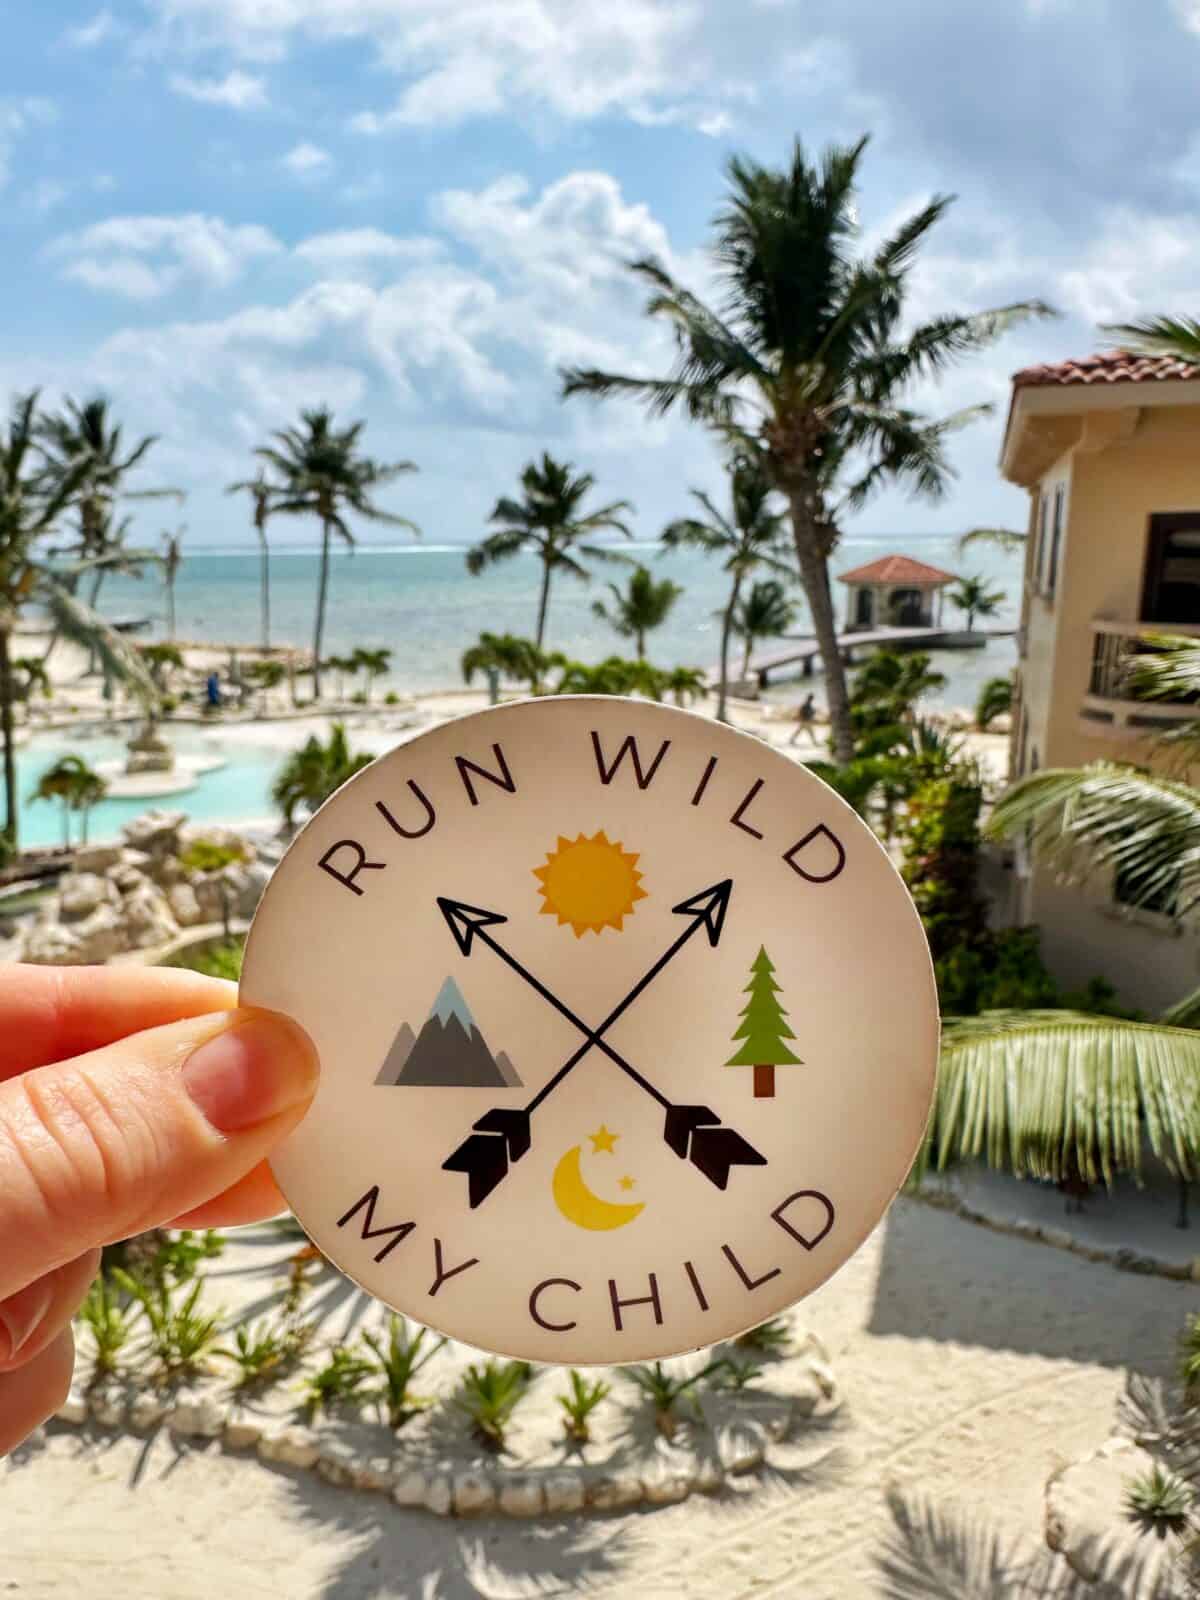 Run Wild My Child explore Belize with kids